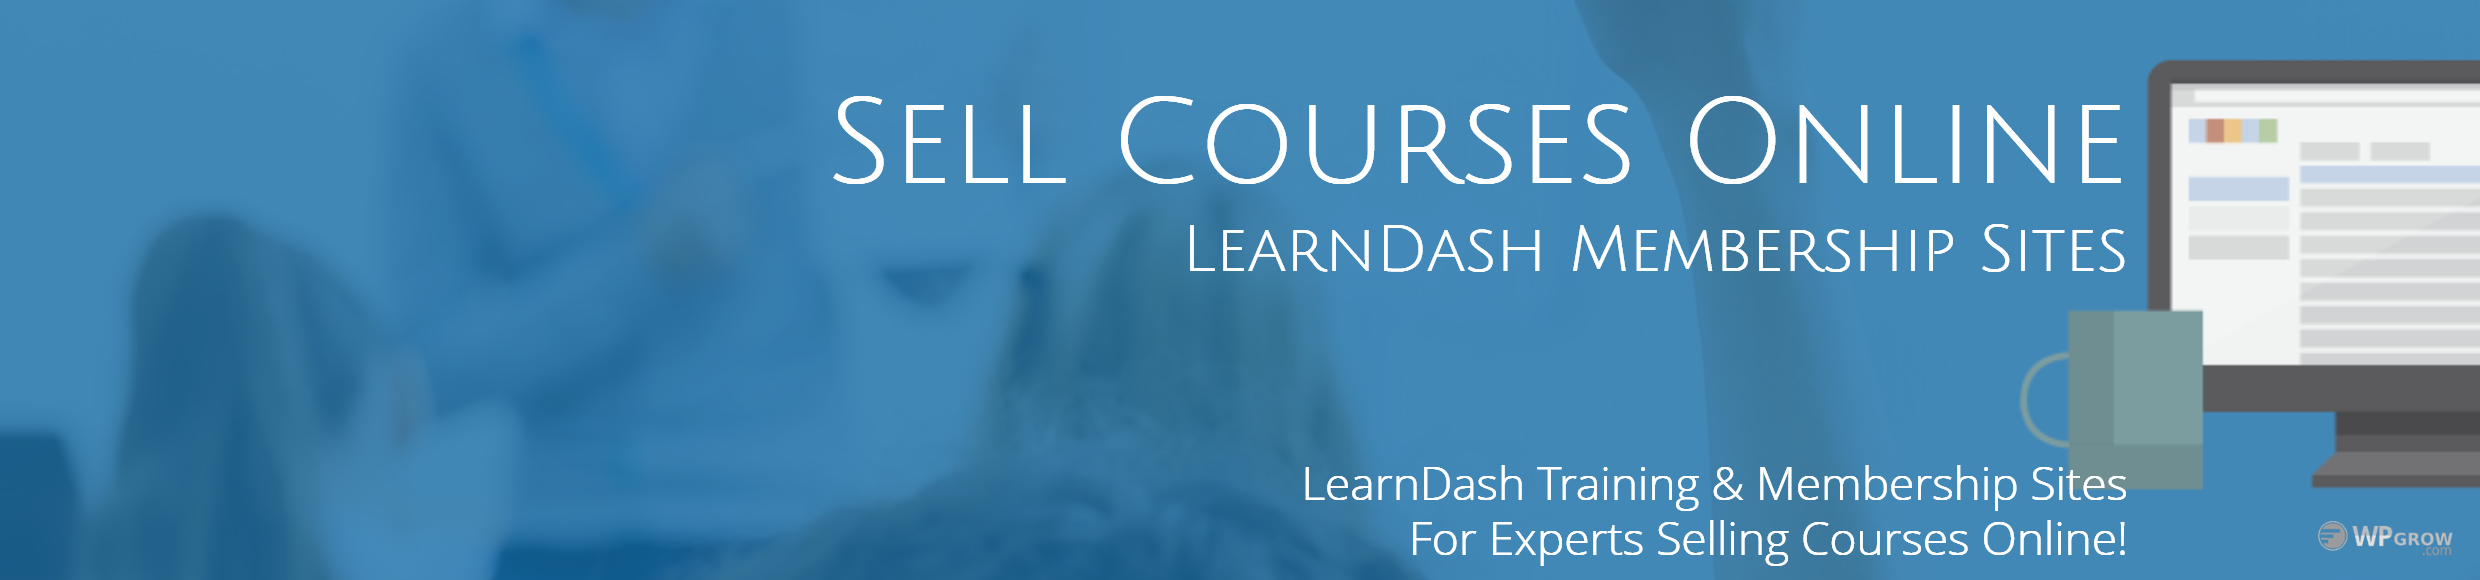 LearnDash Membership Site Podcast Seies